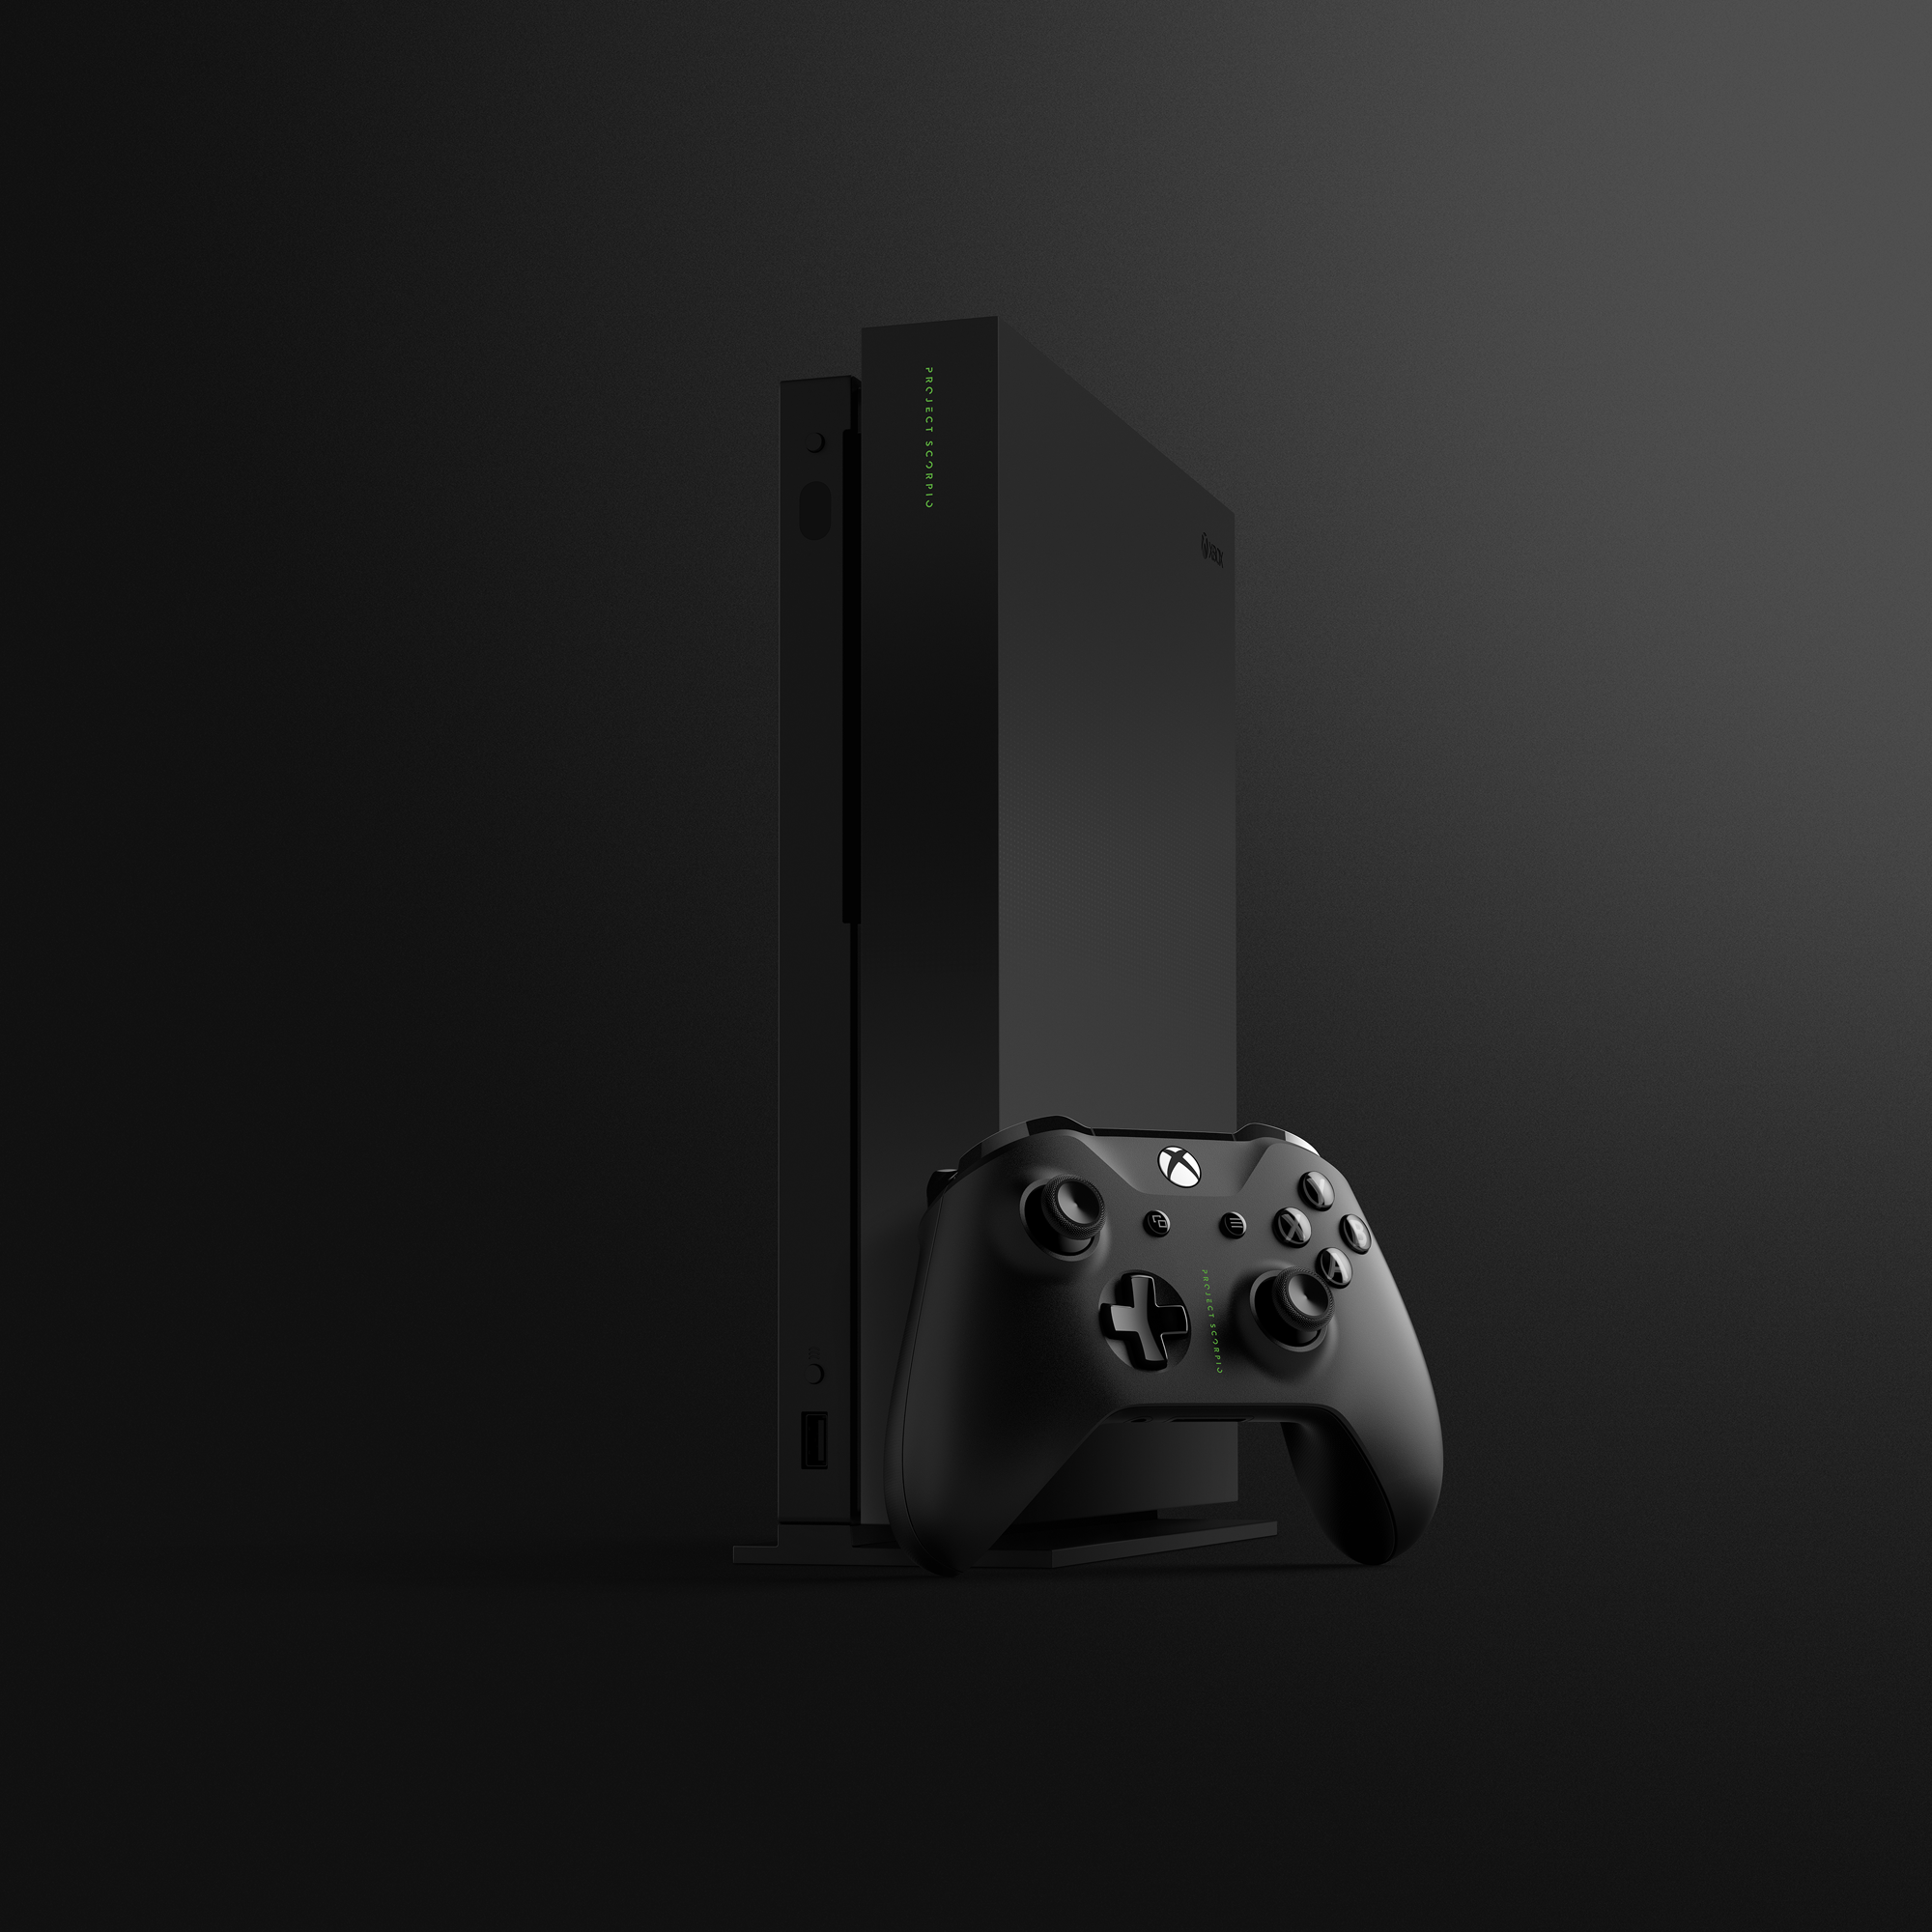 Xbox One X Project Scorpio Edition 1TB Console - image 1 of 7